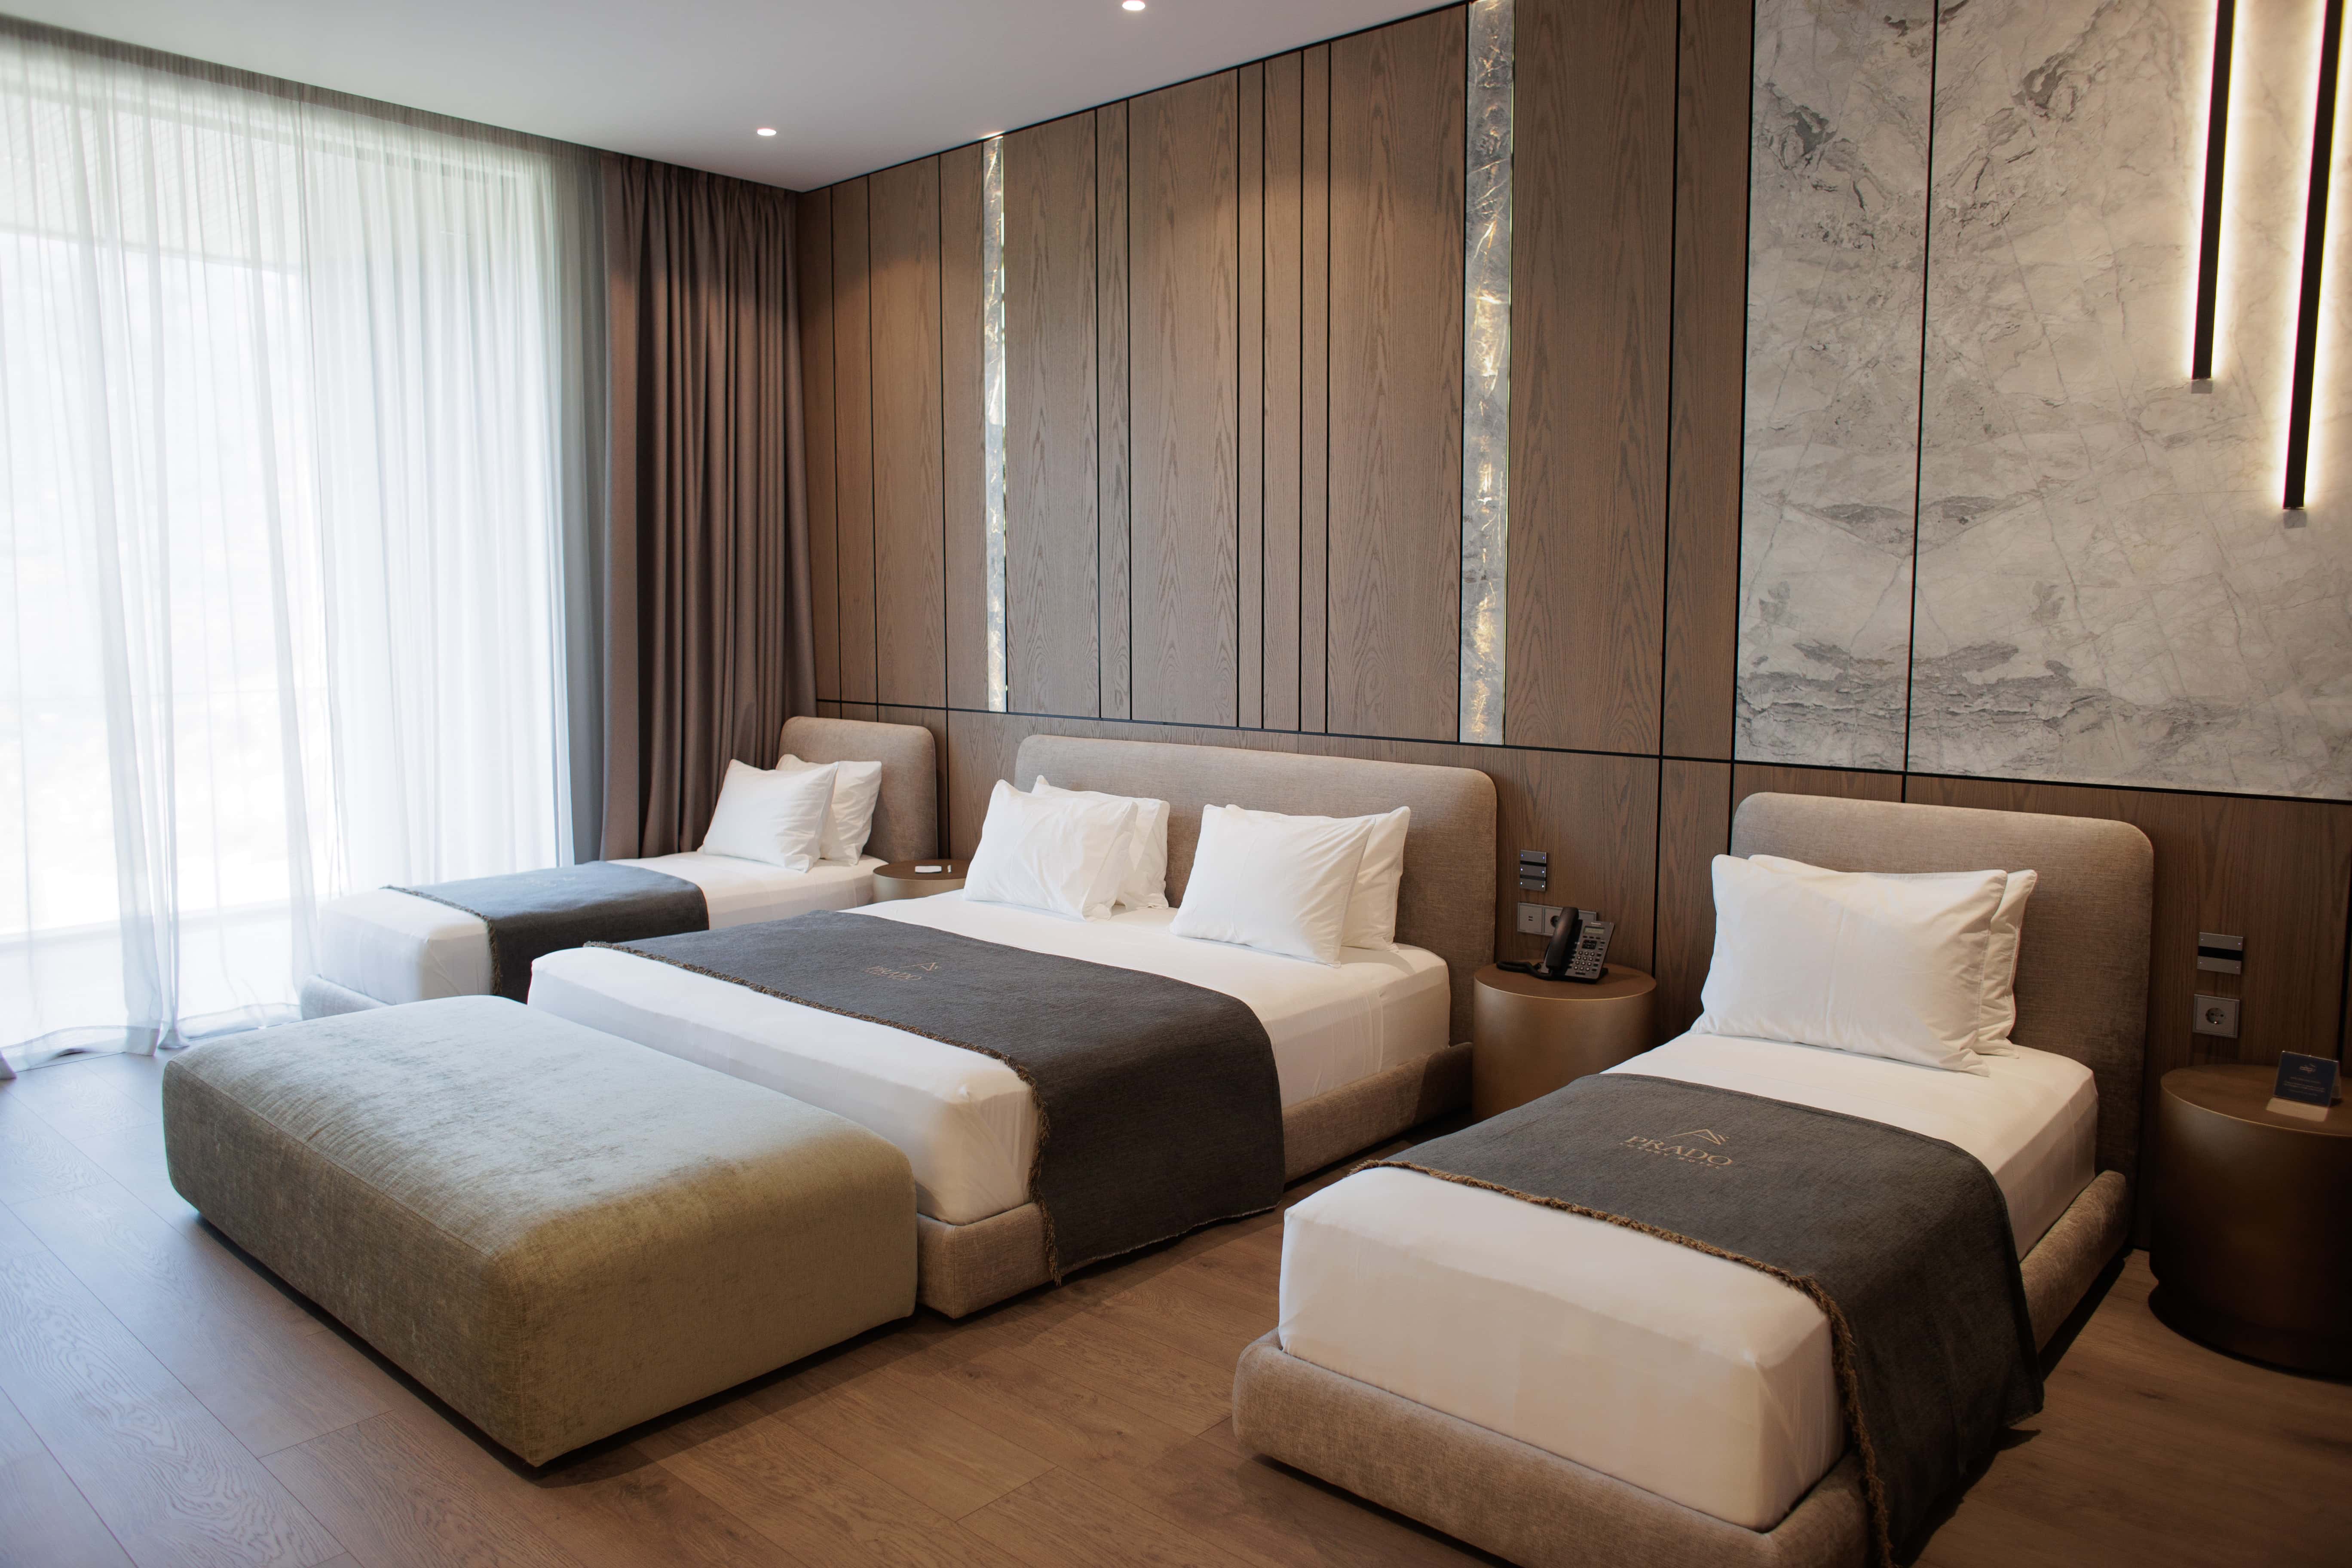 prado_luxury_hotel_room_family_suite_beds_view